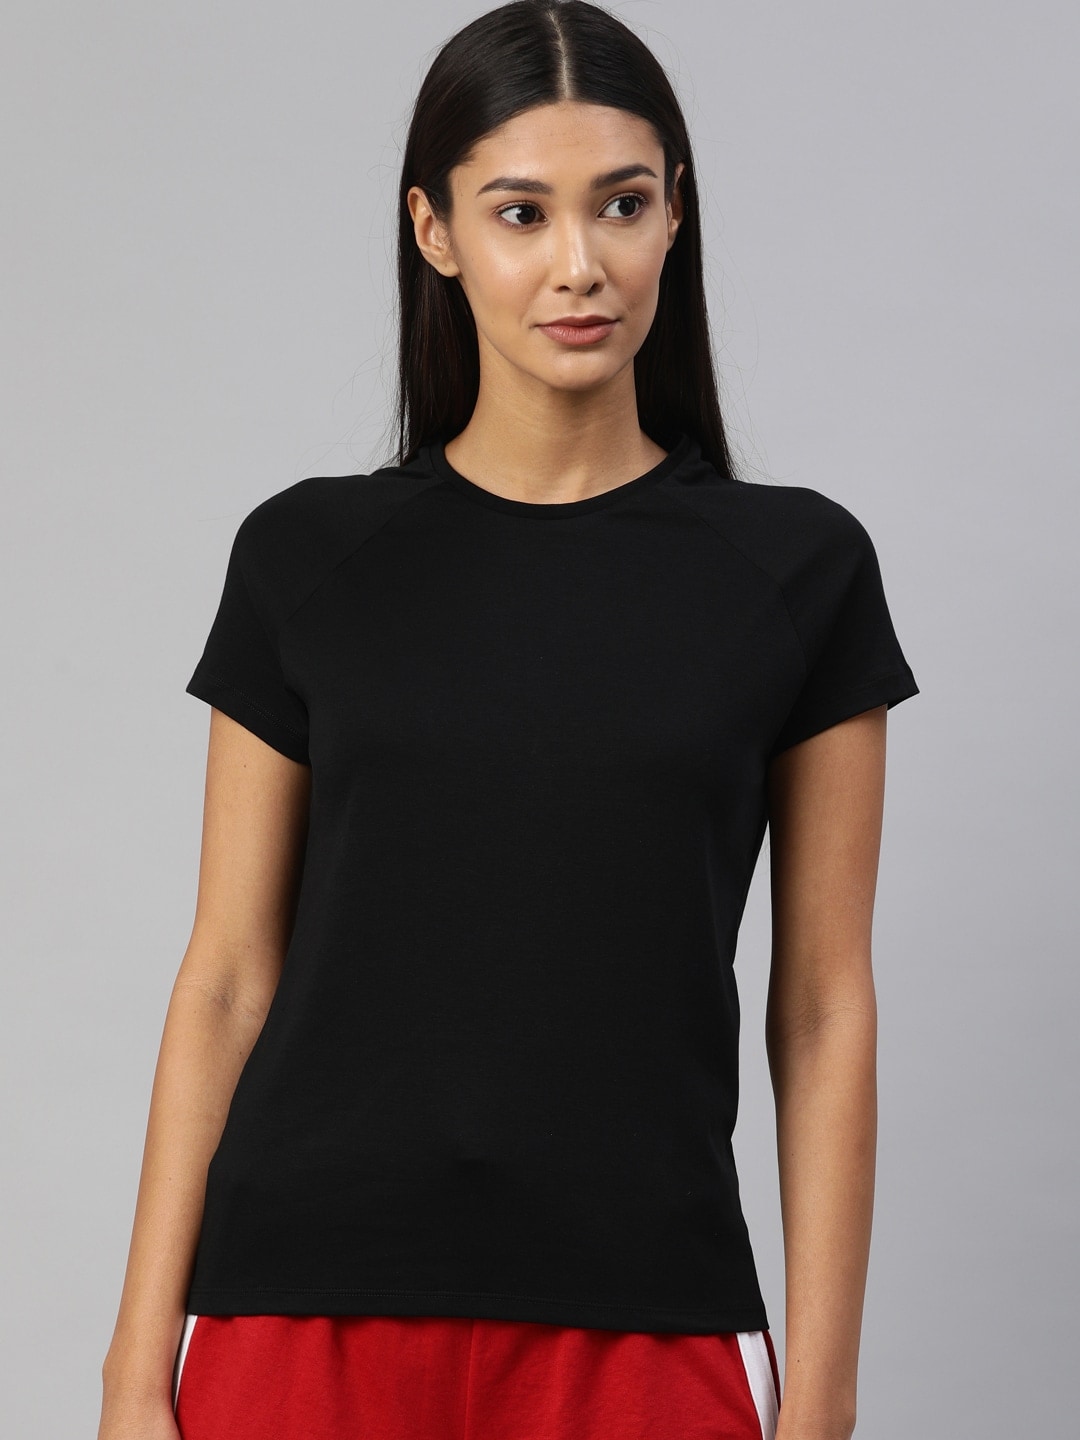 Van Heusen Women Black Solid Round Neck Lounge T-Shirts Price in India